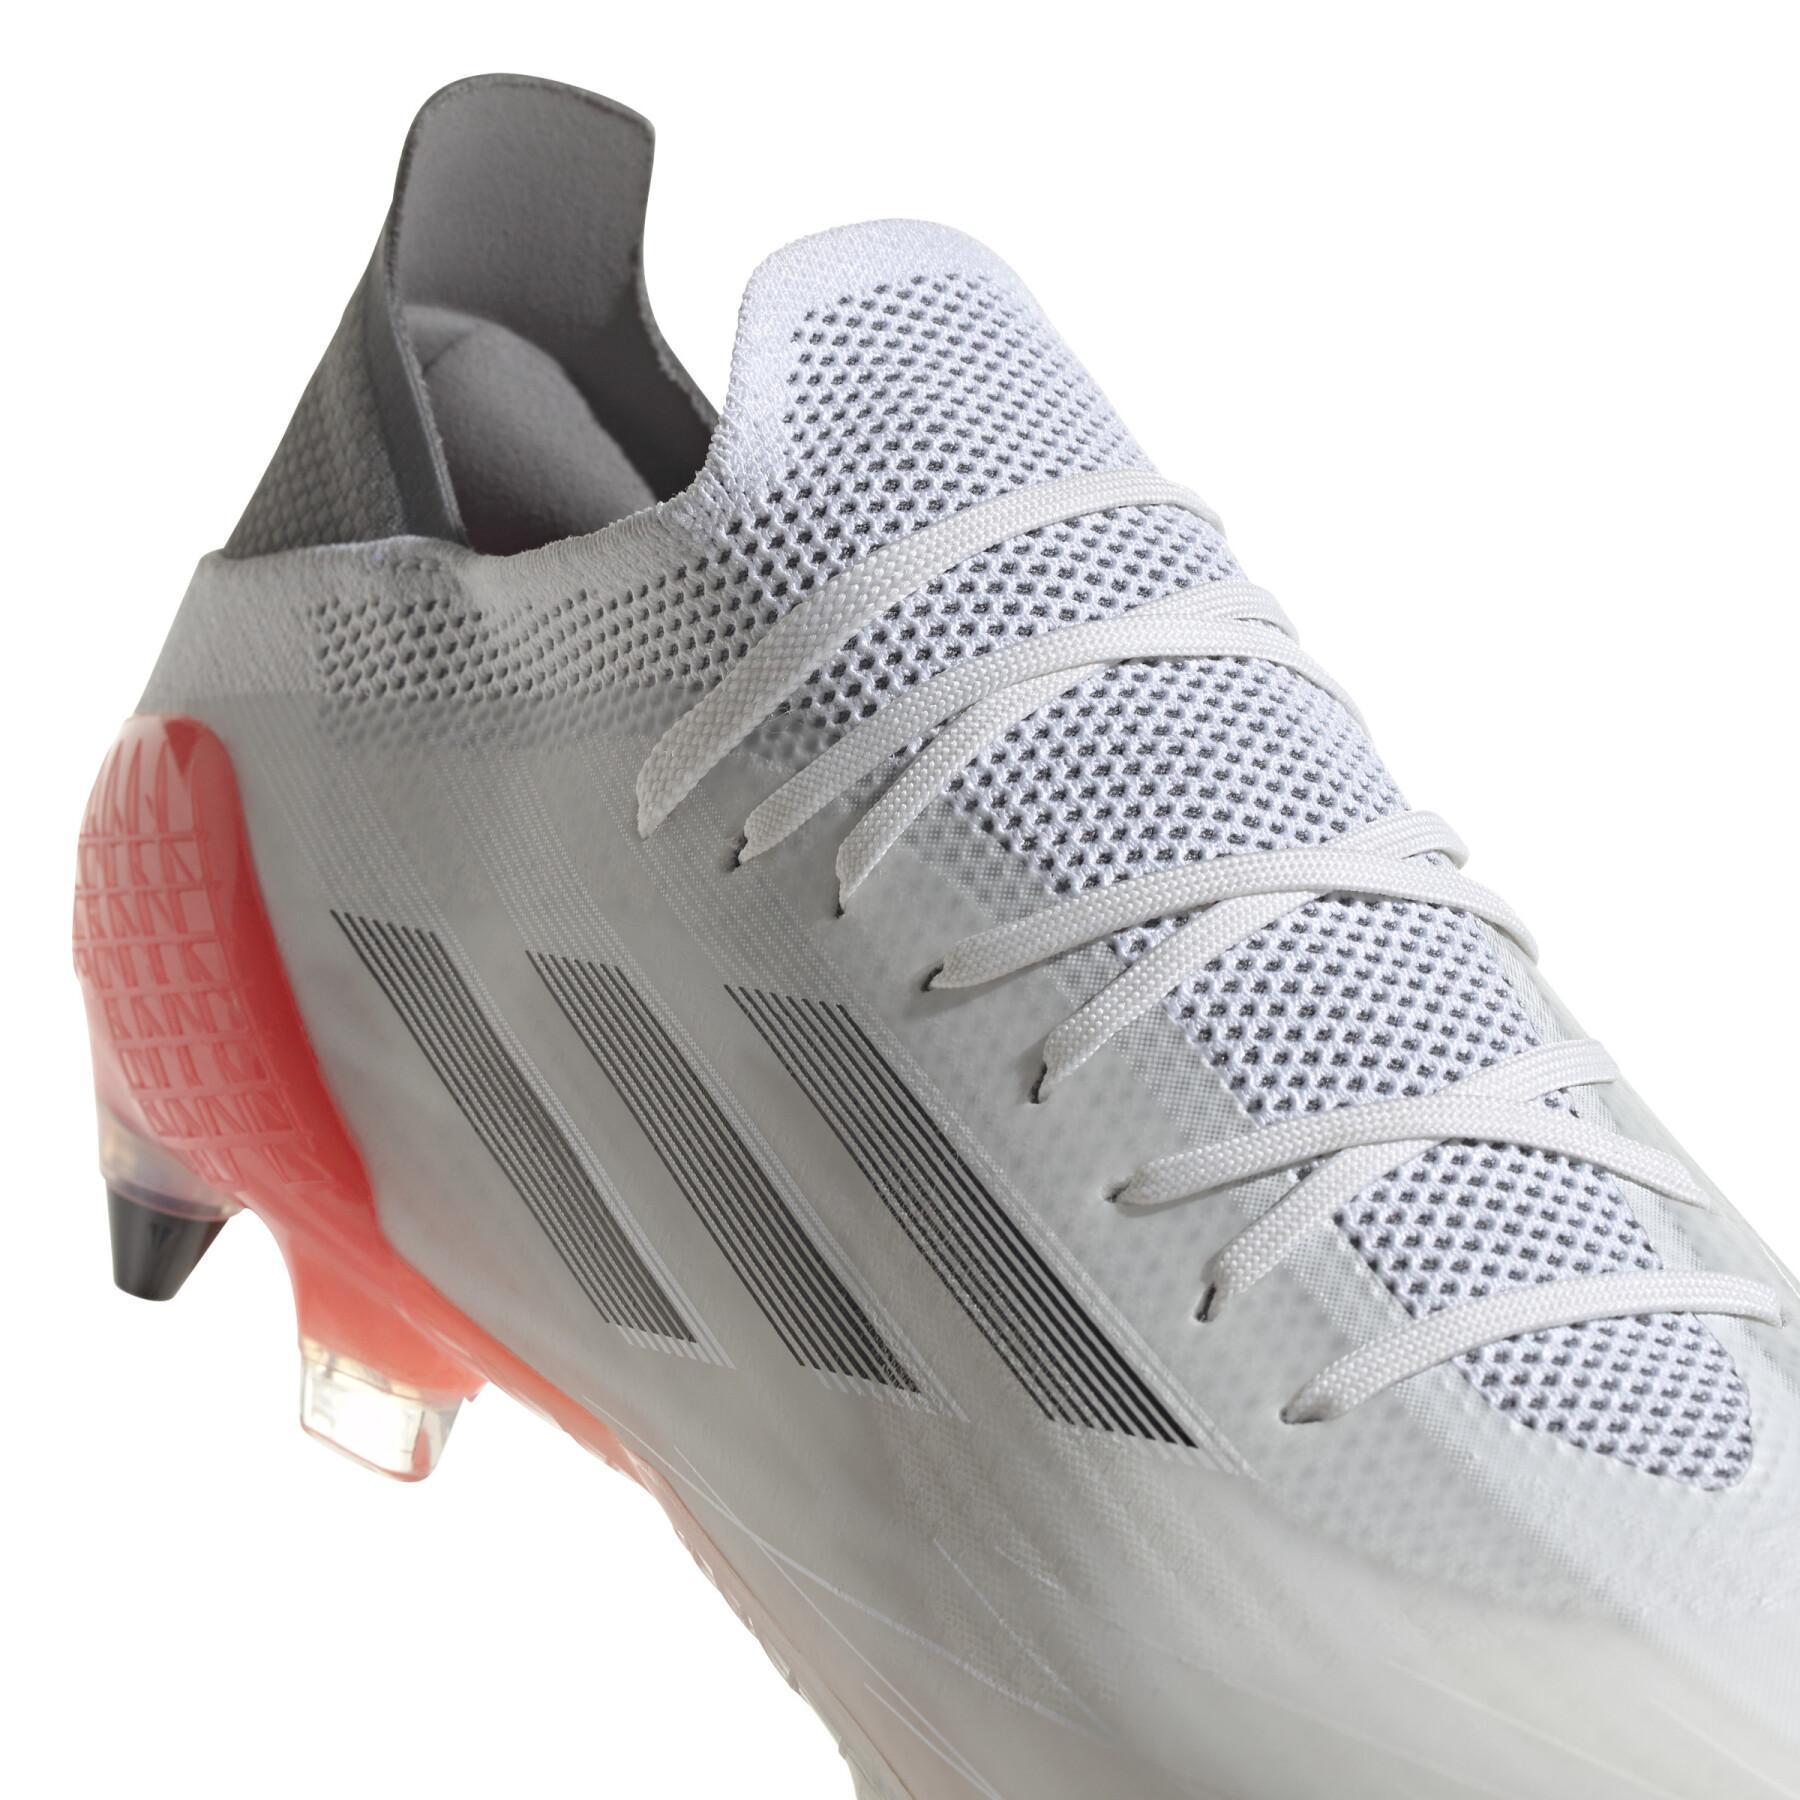 Fußballschuhe adidas X Speedflow 1 SG - Whitespark